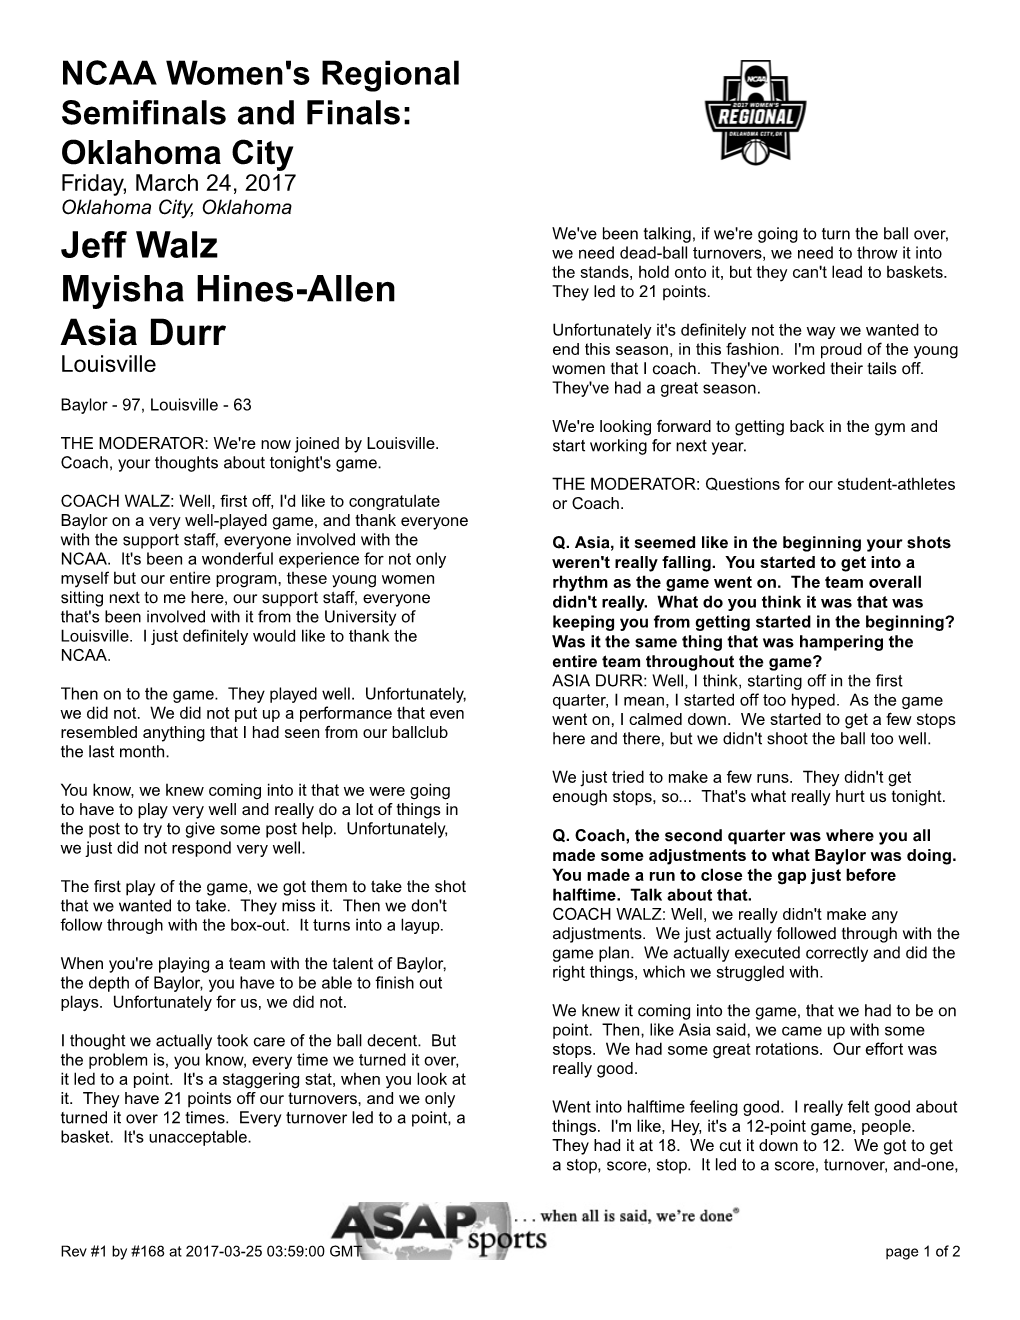 Jeff Walz Myisha Hines-Allen Asia Durr